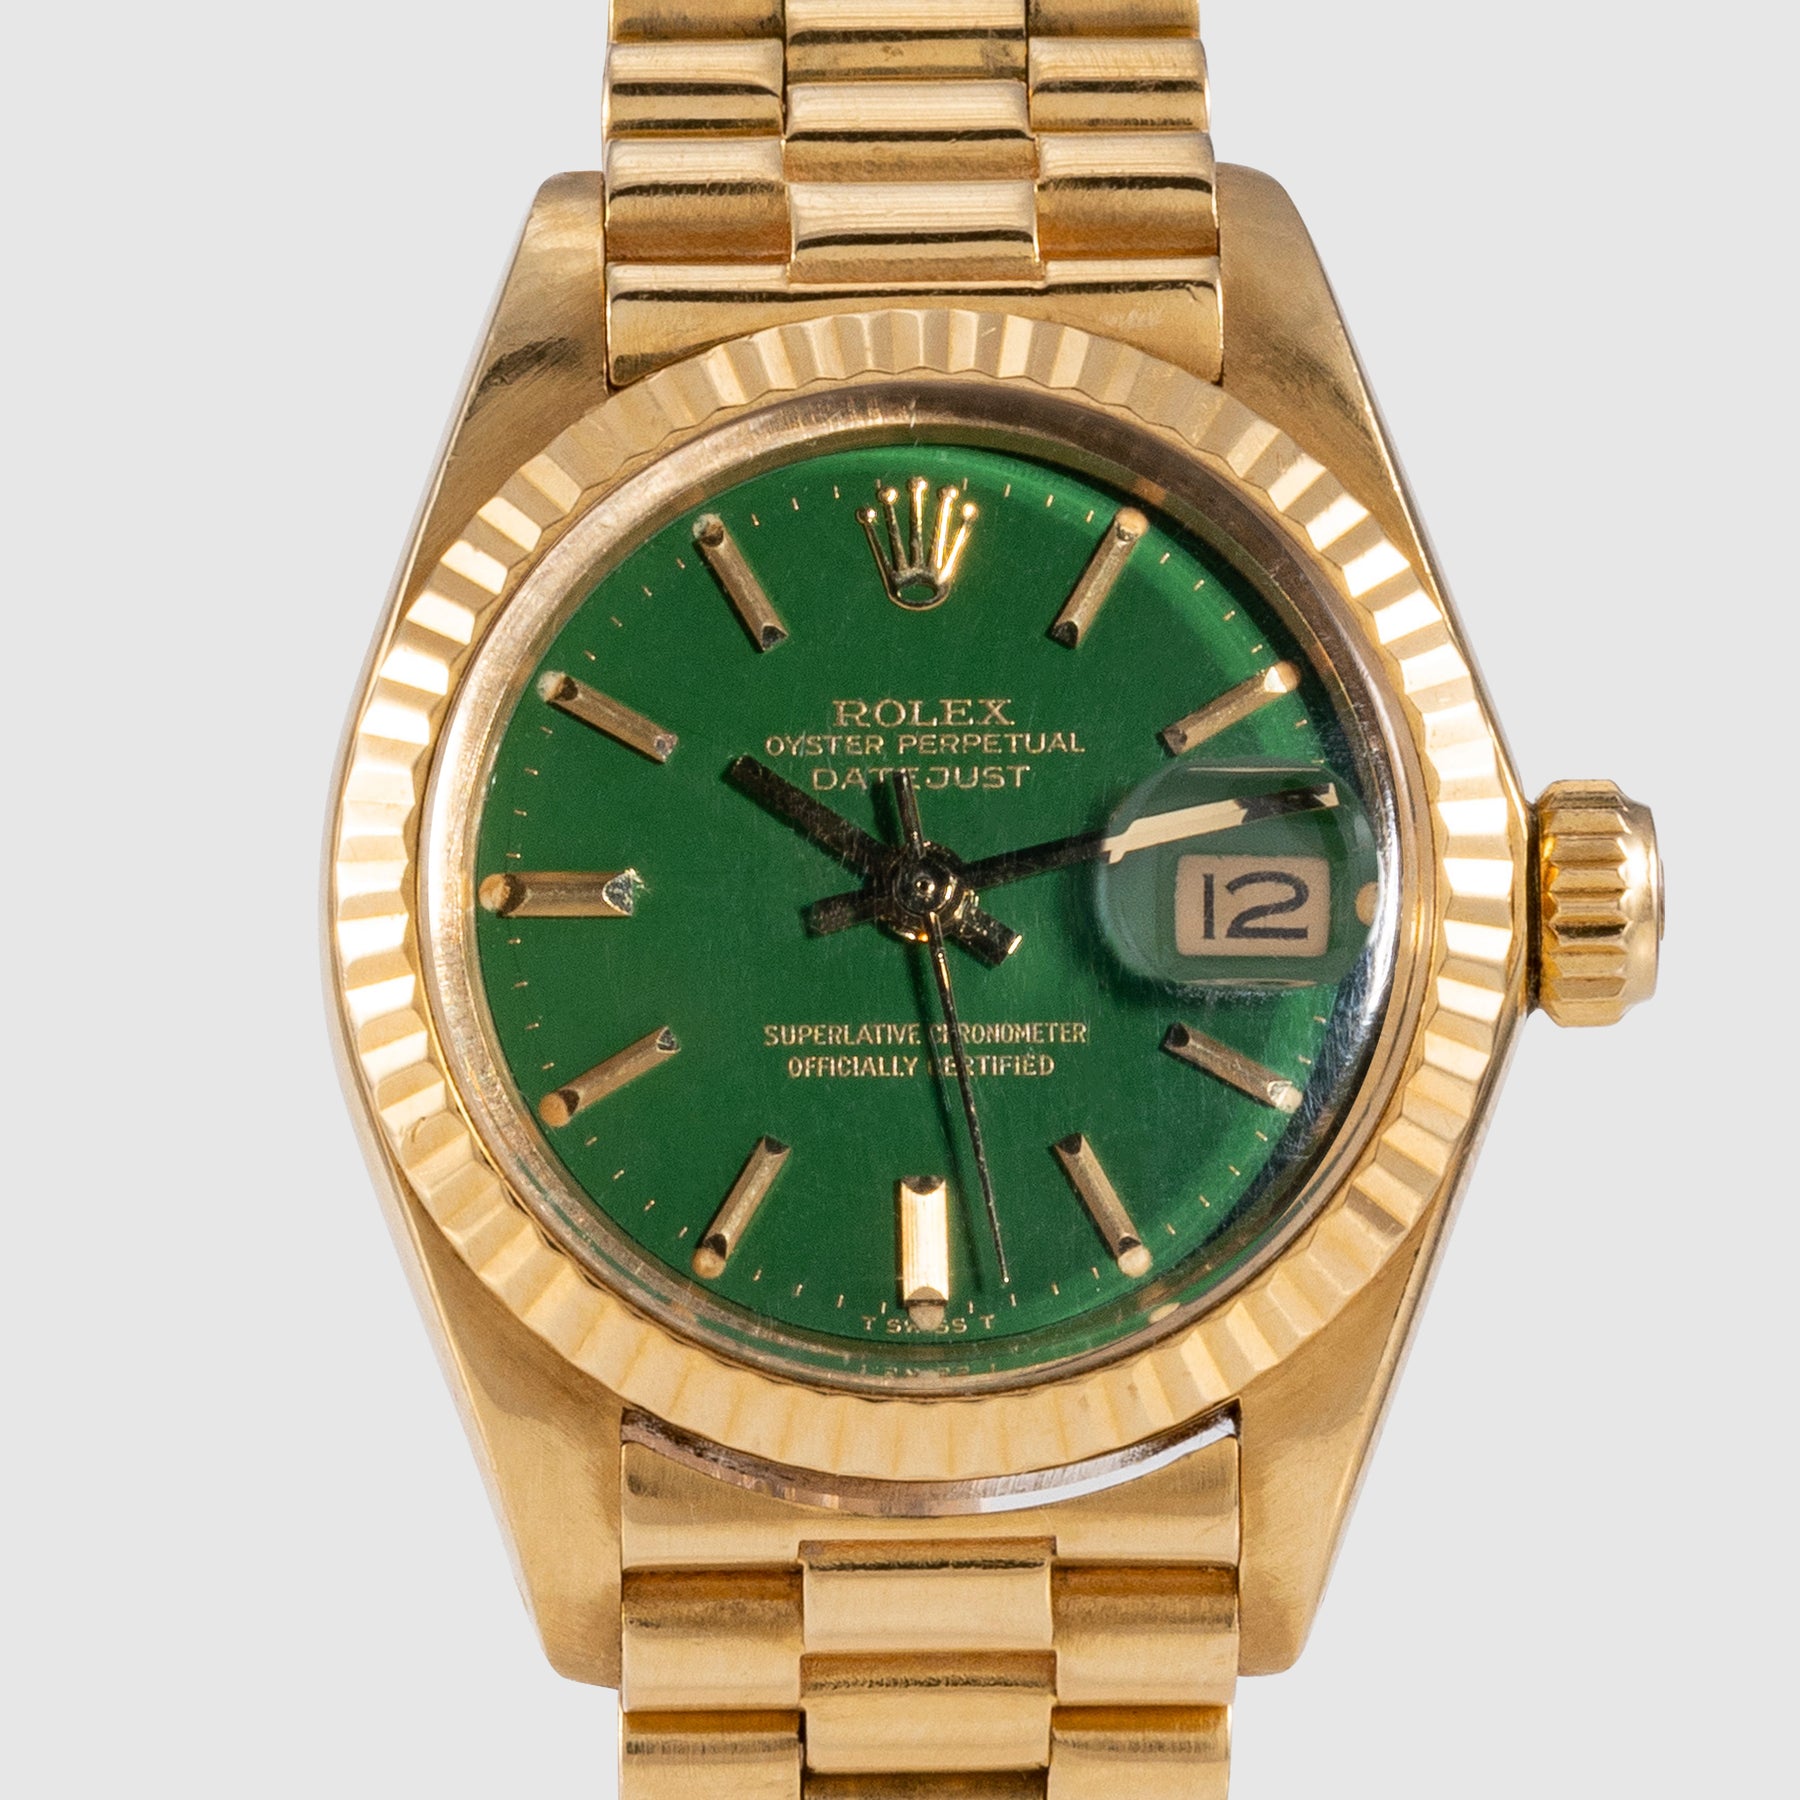 1979 Rolex Datejust Green Stella Dial Ref. 6917